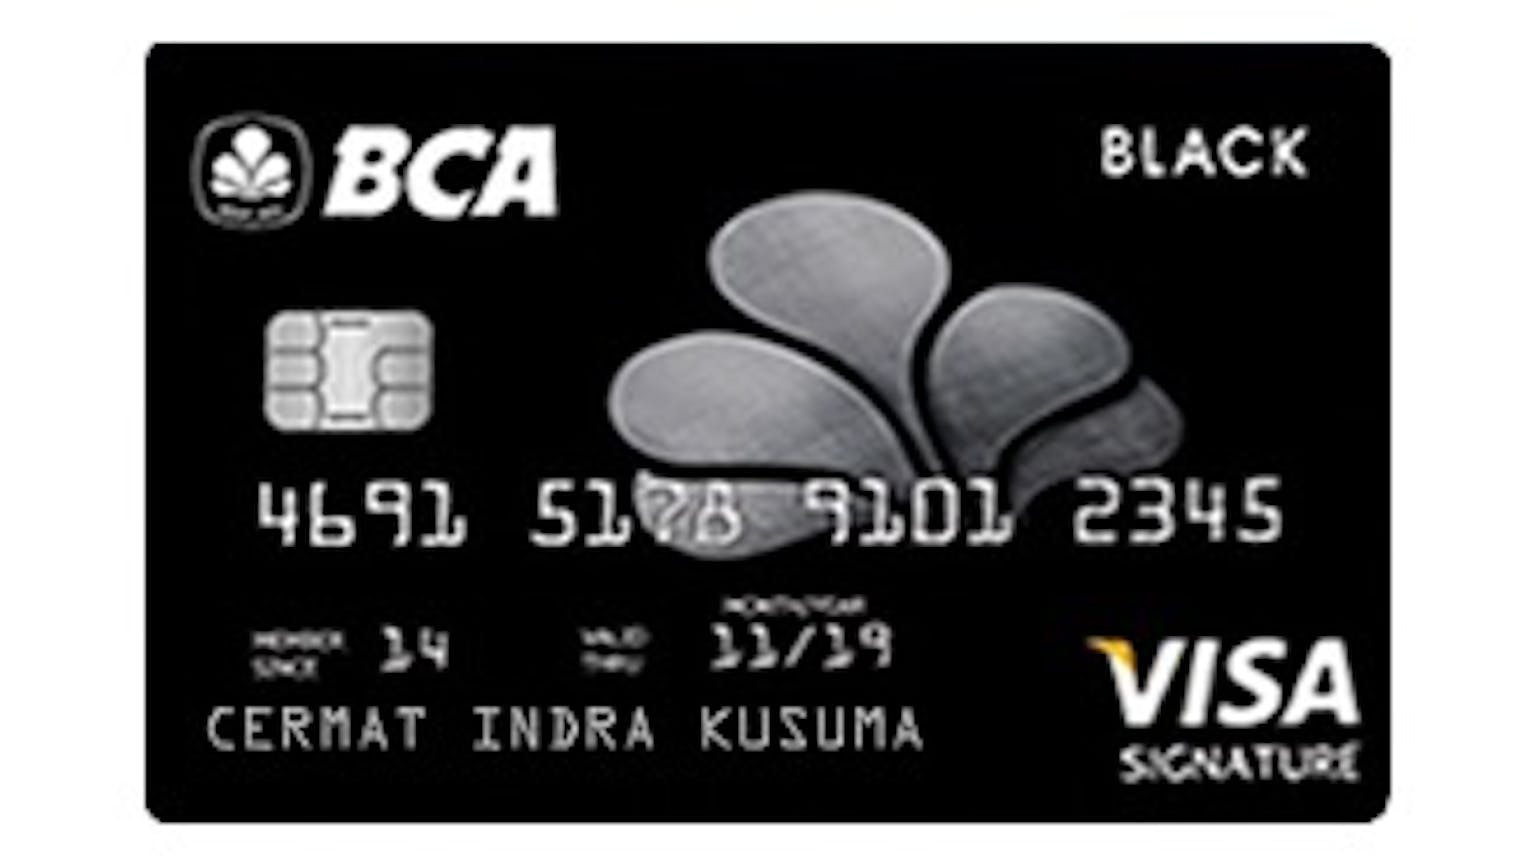 BCA VISA Black